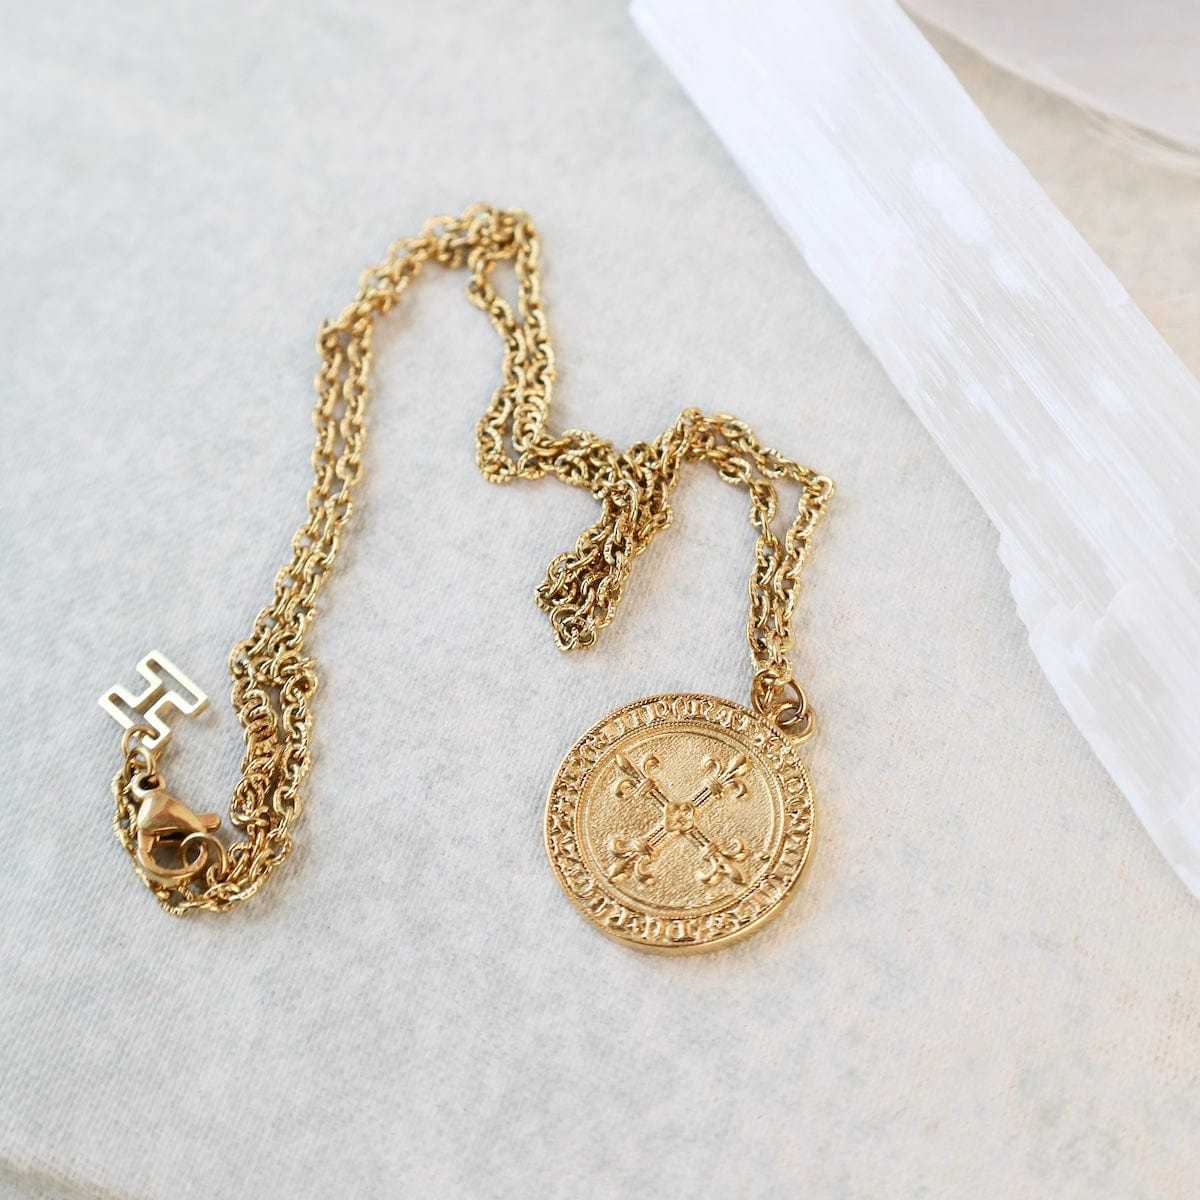 NKL-GPL NINA // The Little Gold Shield Necklace - 18k gold